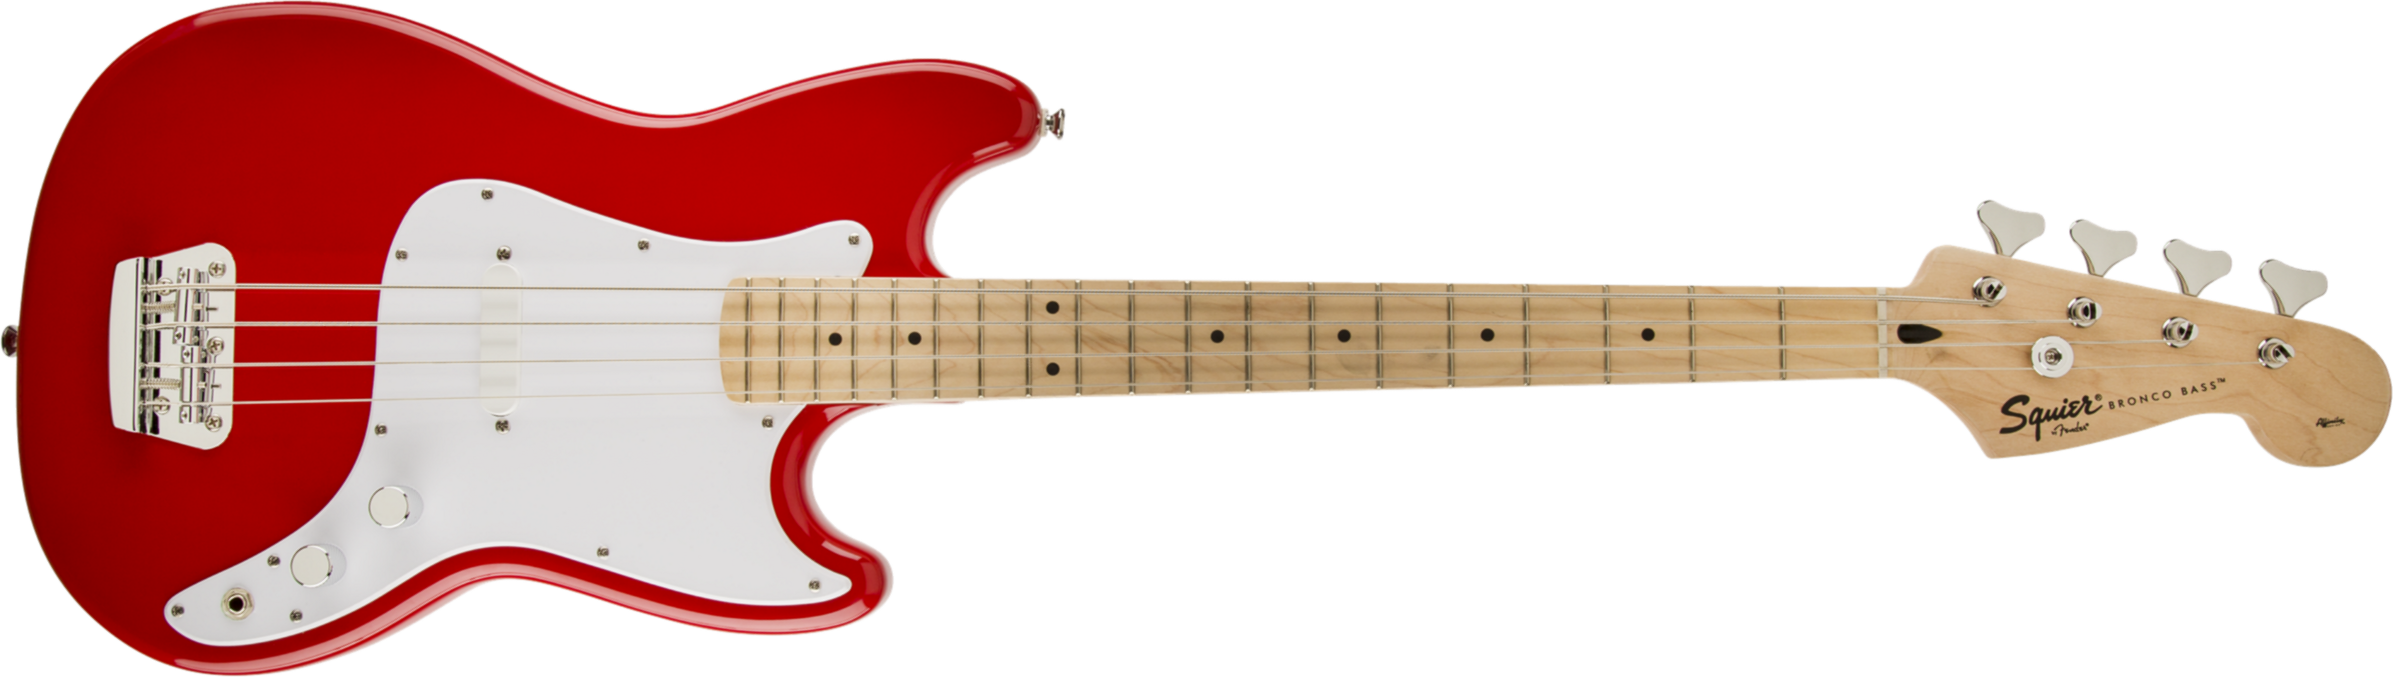 Squier Bronco Bass Mn - Torino Red - Short scale elektrische bas - Main picture